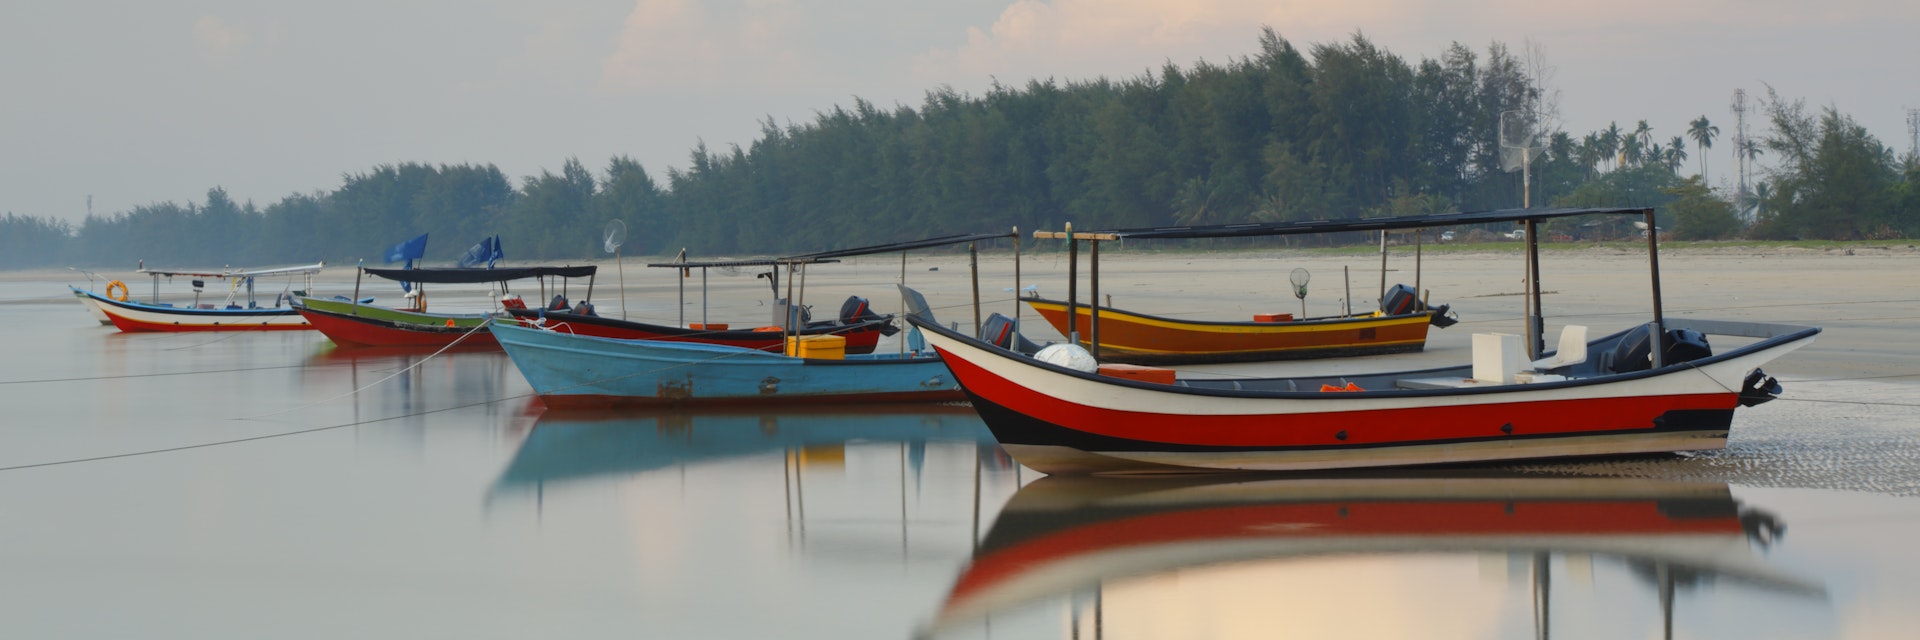 Local fishing boats lined along the shore. Cherating, Malaysia.